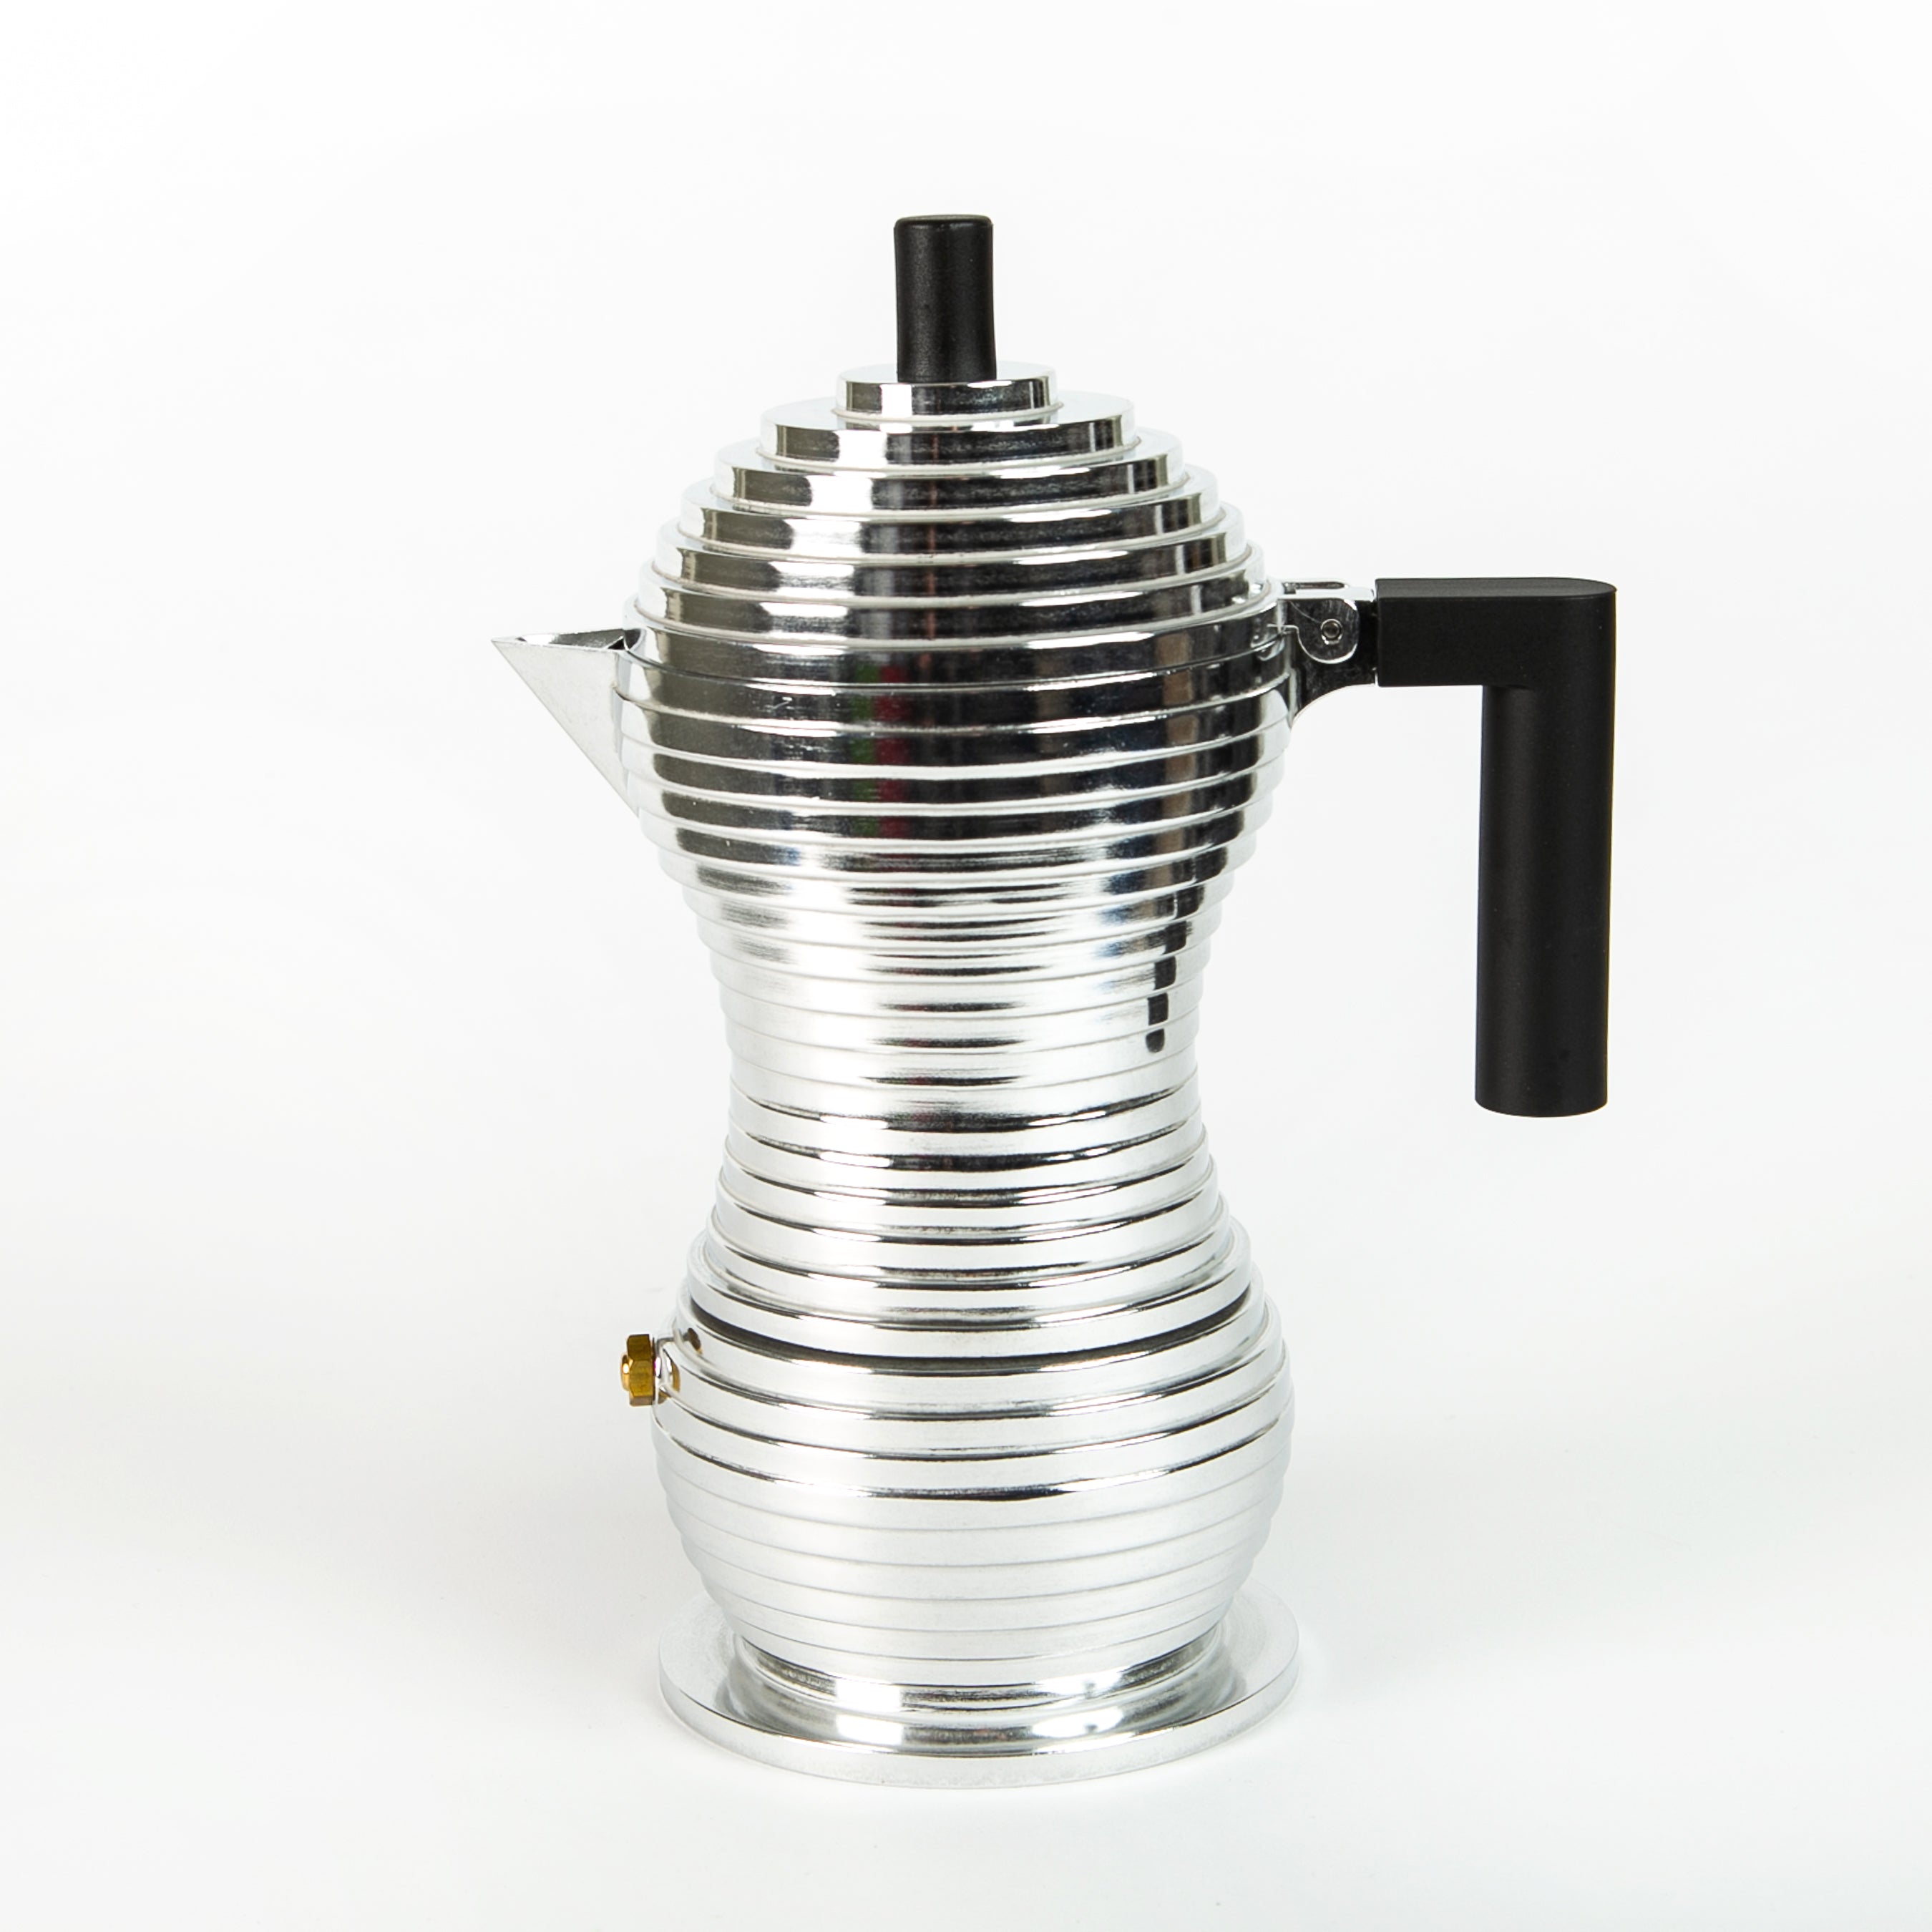 Alessi Pulcina Induction Espresso Coffee Maker